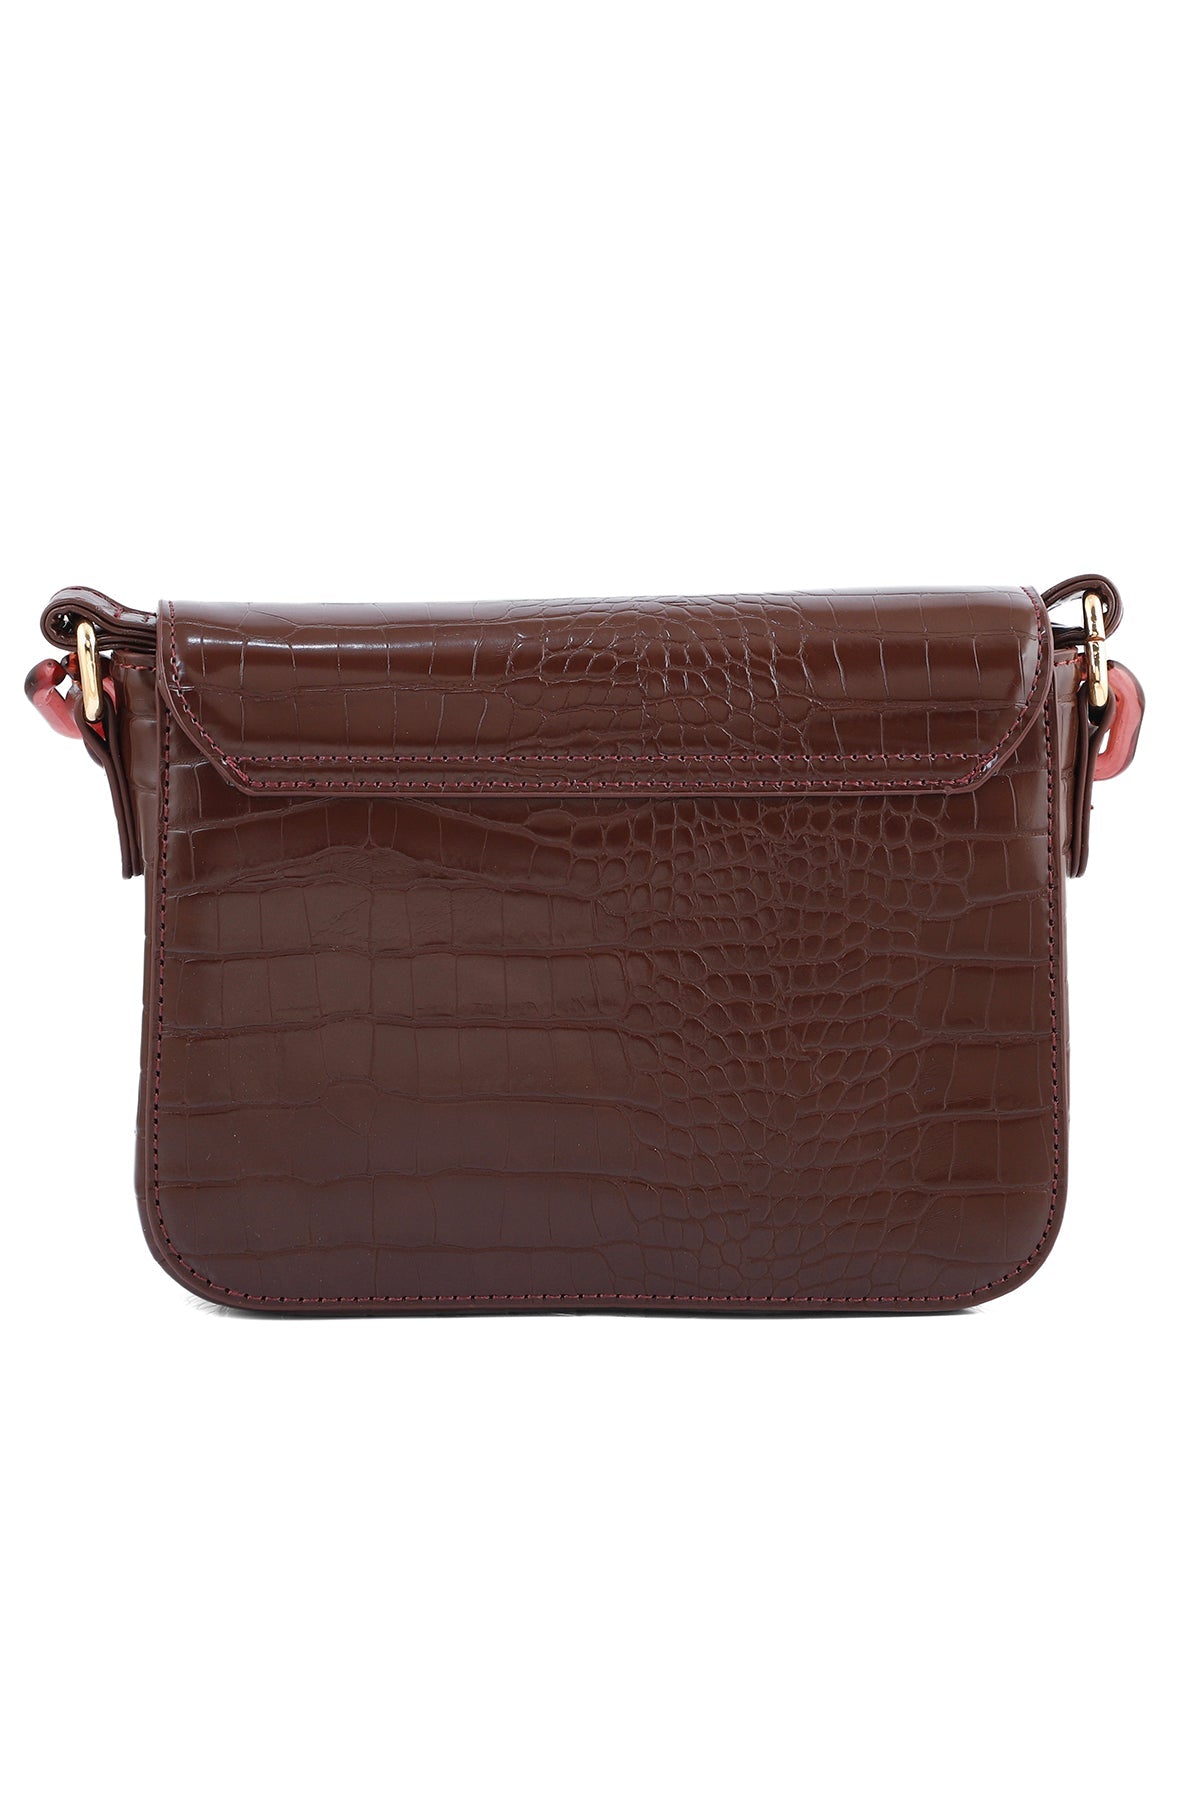 Flap Shoulder Bags B15017-Brown